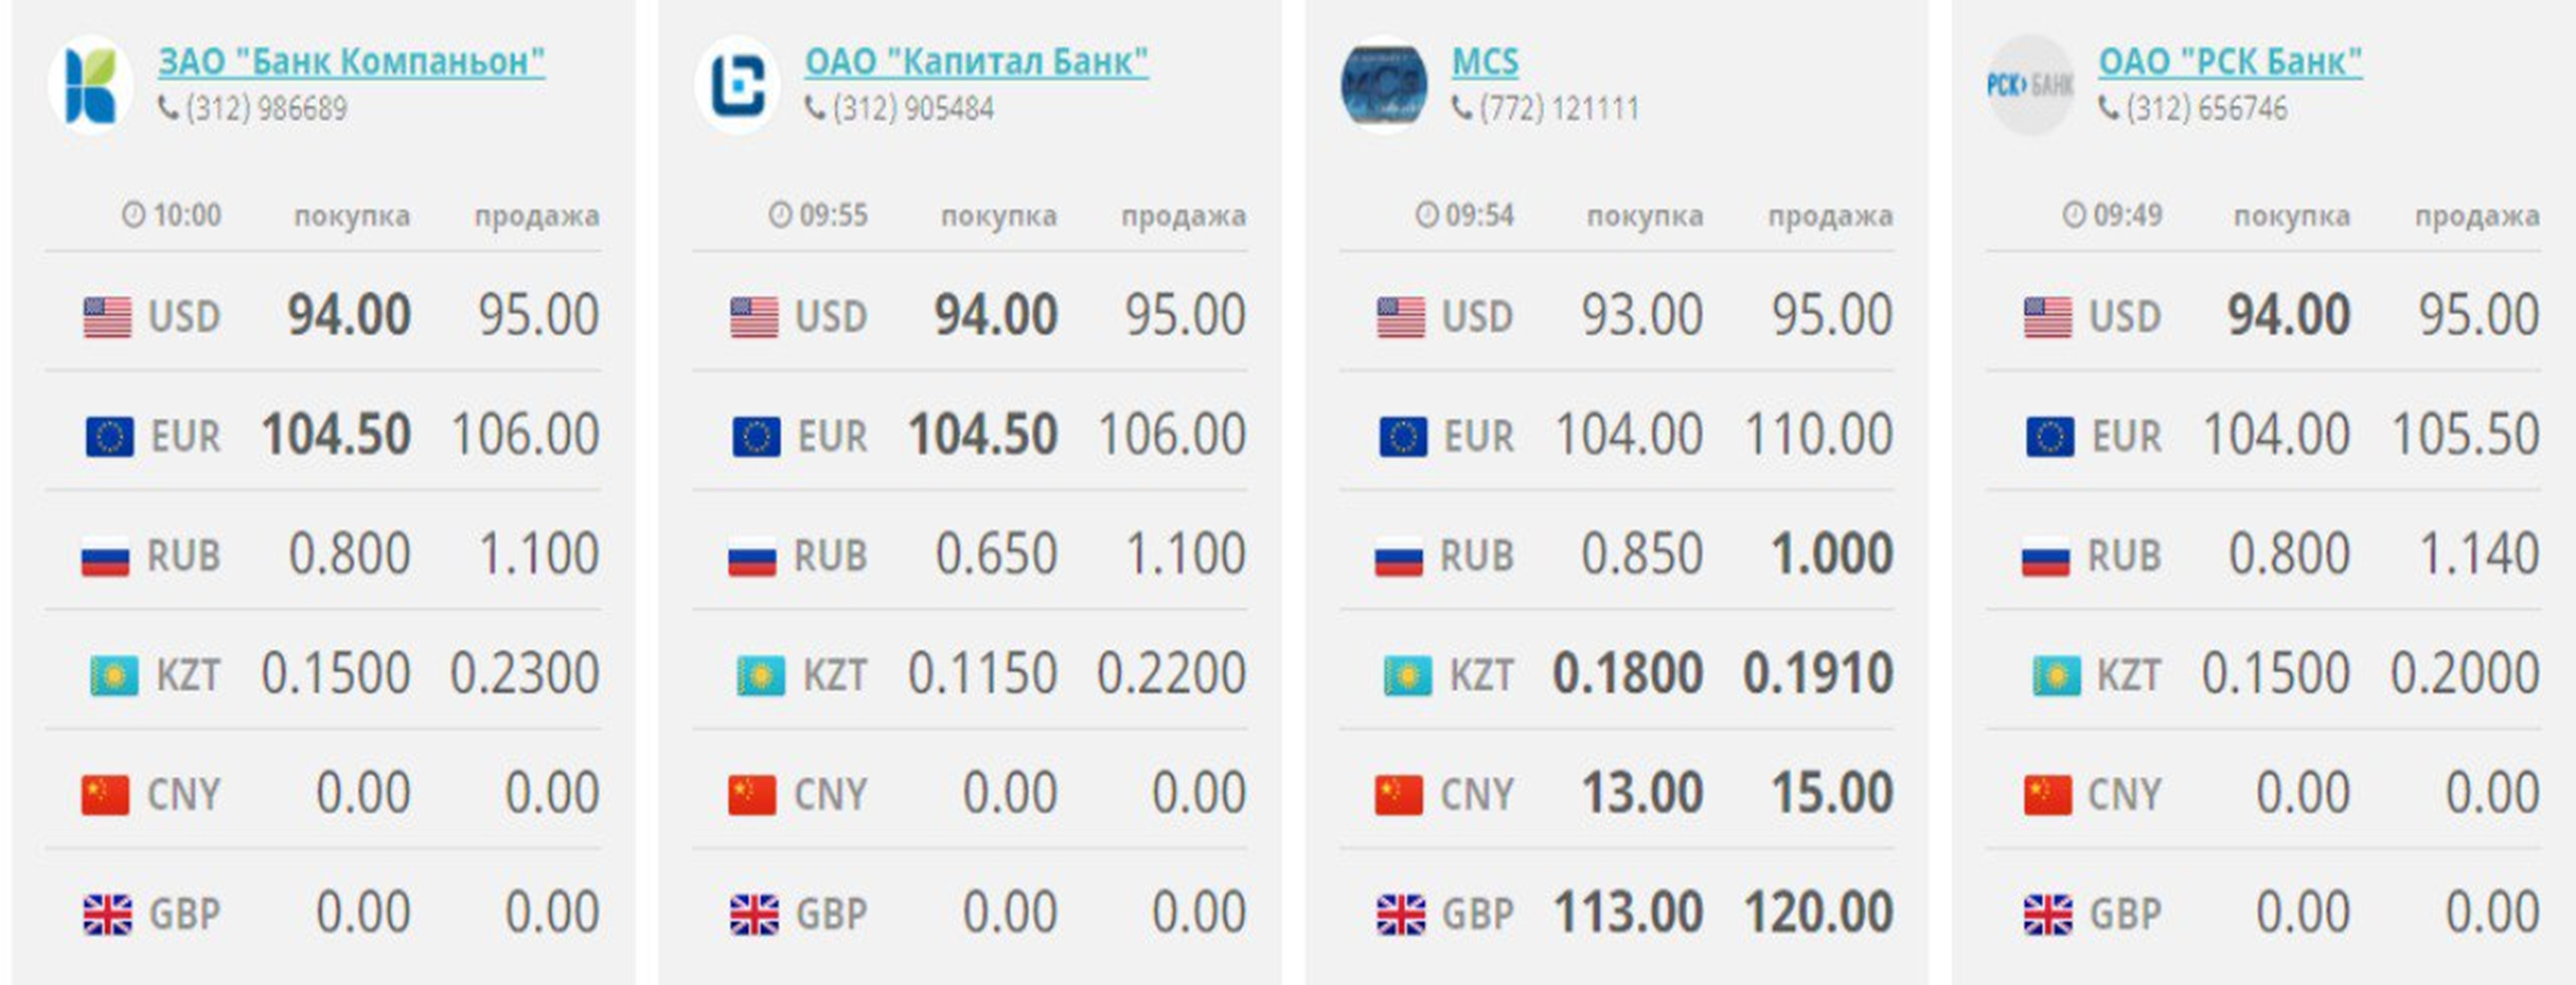 Курс валюта кыргызстана рубль сегодня бишкек